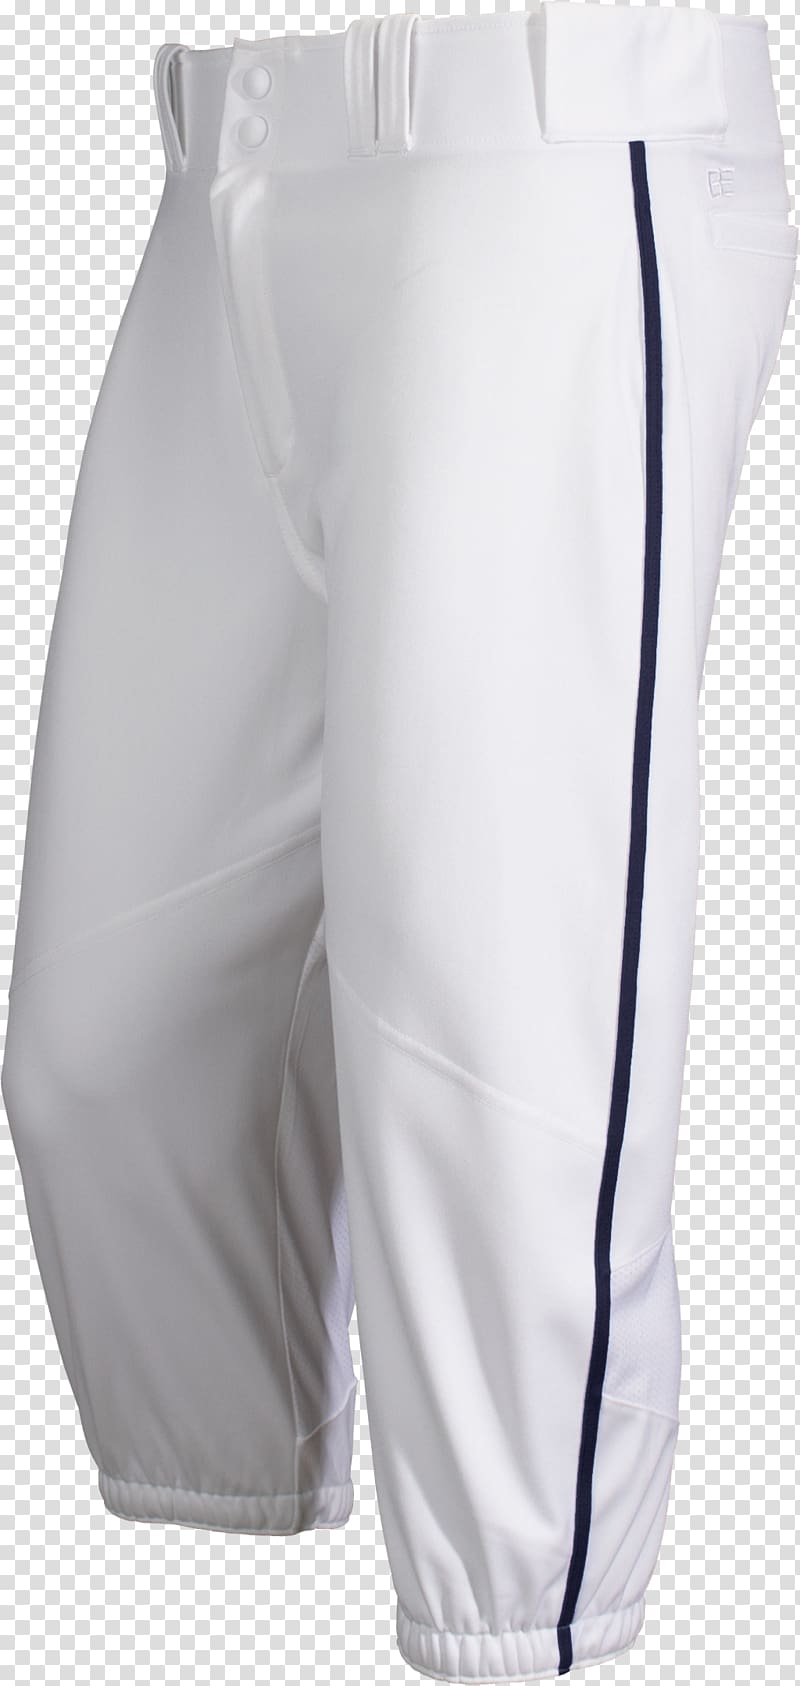 Shorts Pants Active Undergarment, others transparent background PNG clipart